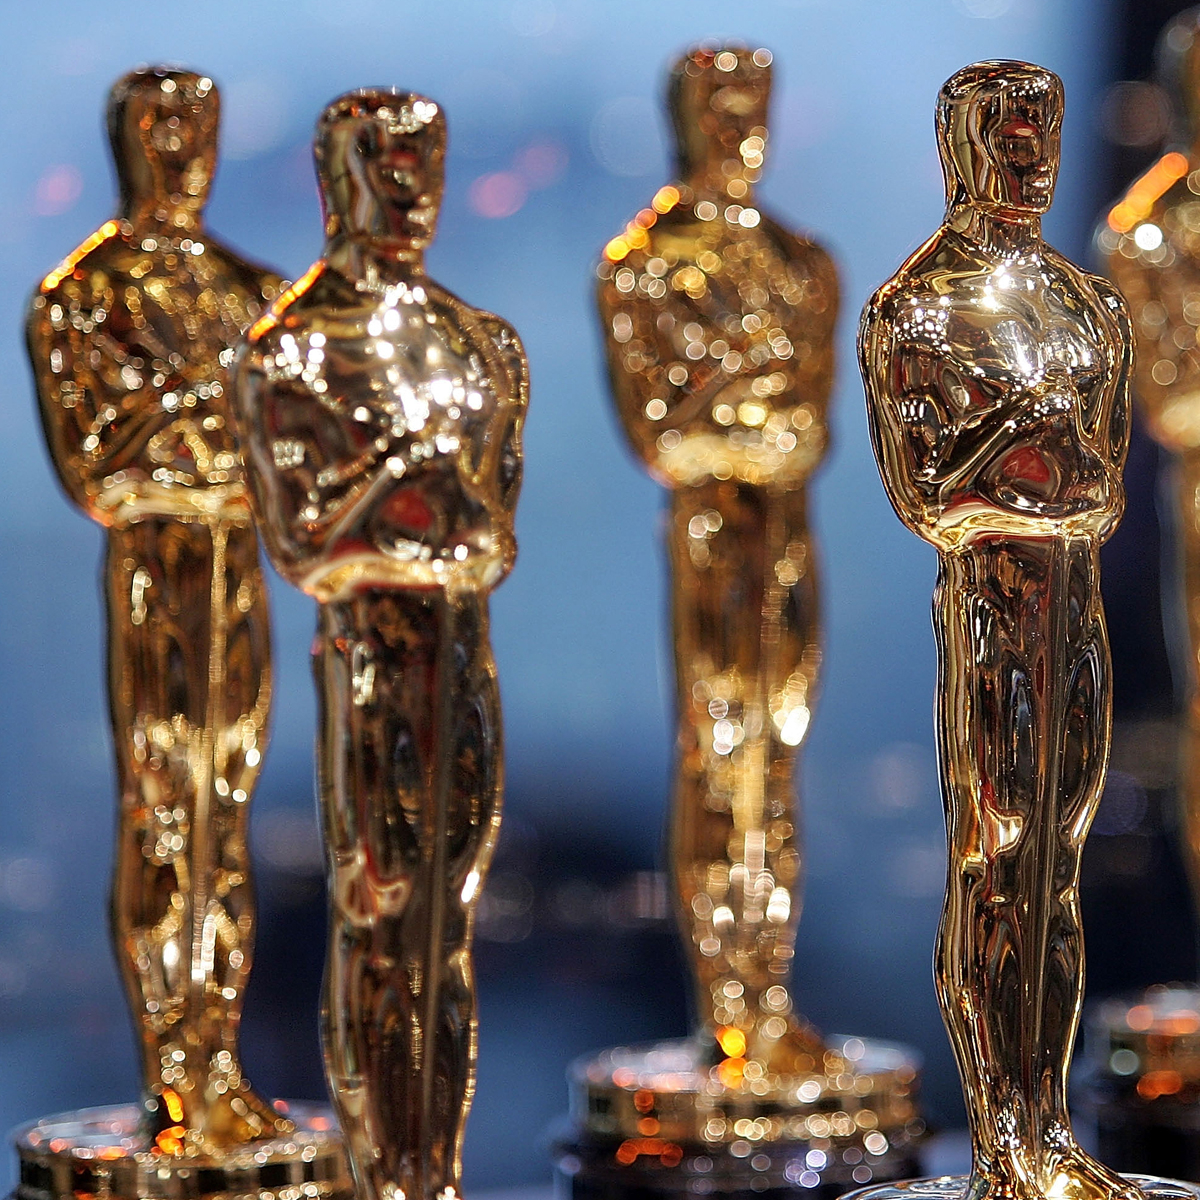 2021 Oscar nominations: See the full list - ABC News